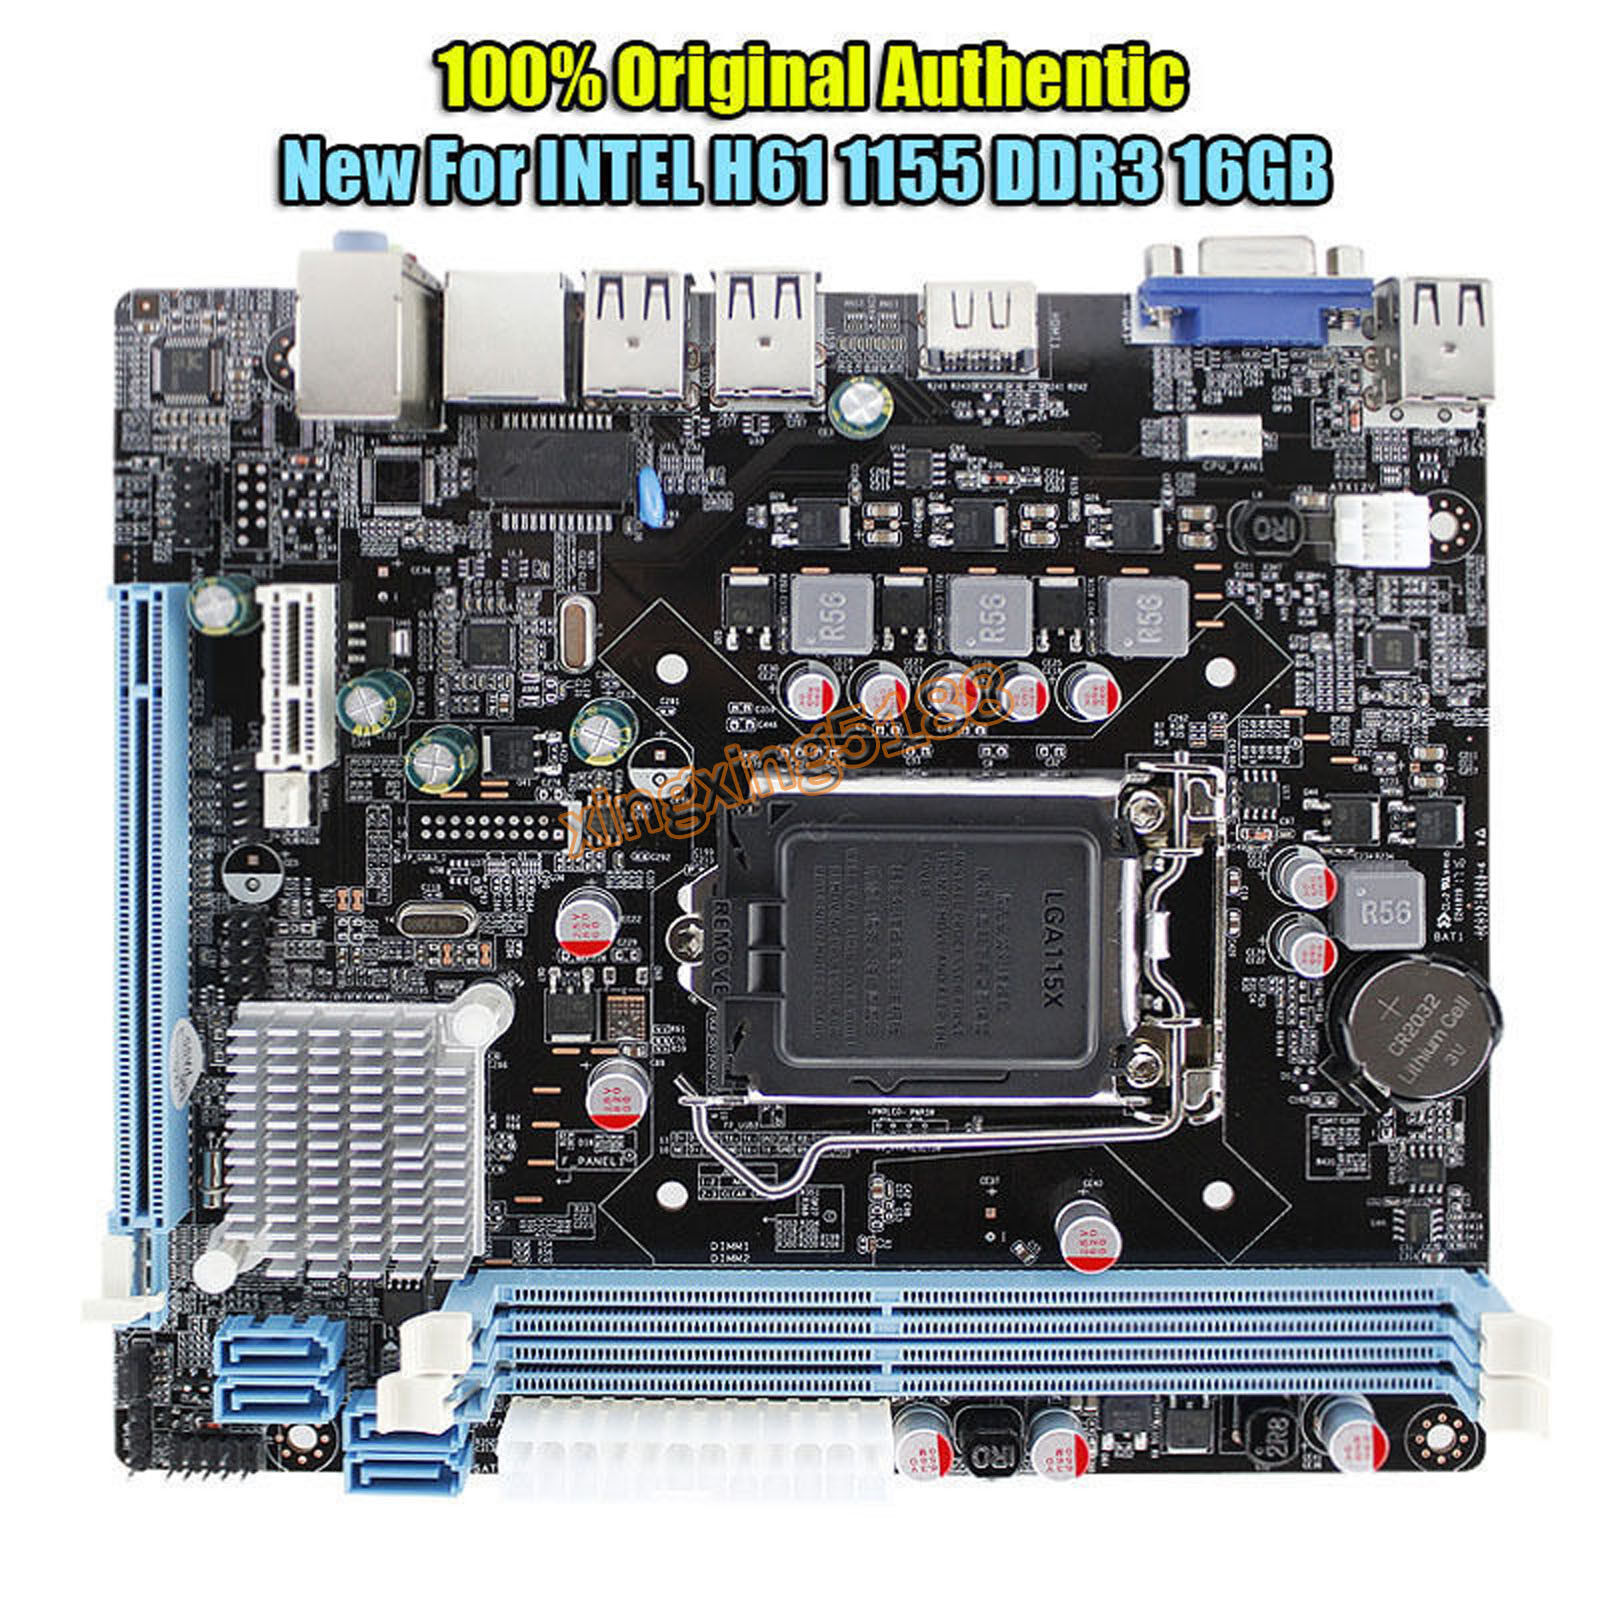 NEW for Intel H61 Socket LGA 1155 MicroATX Computer Motherboard DDR3 PLACA MAE